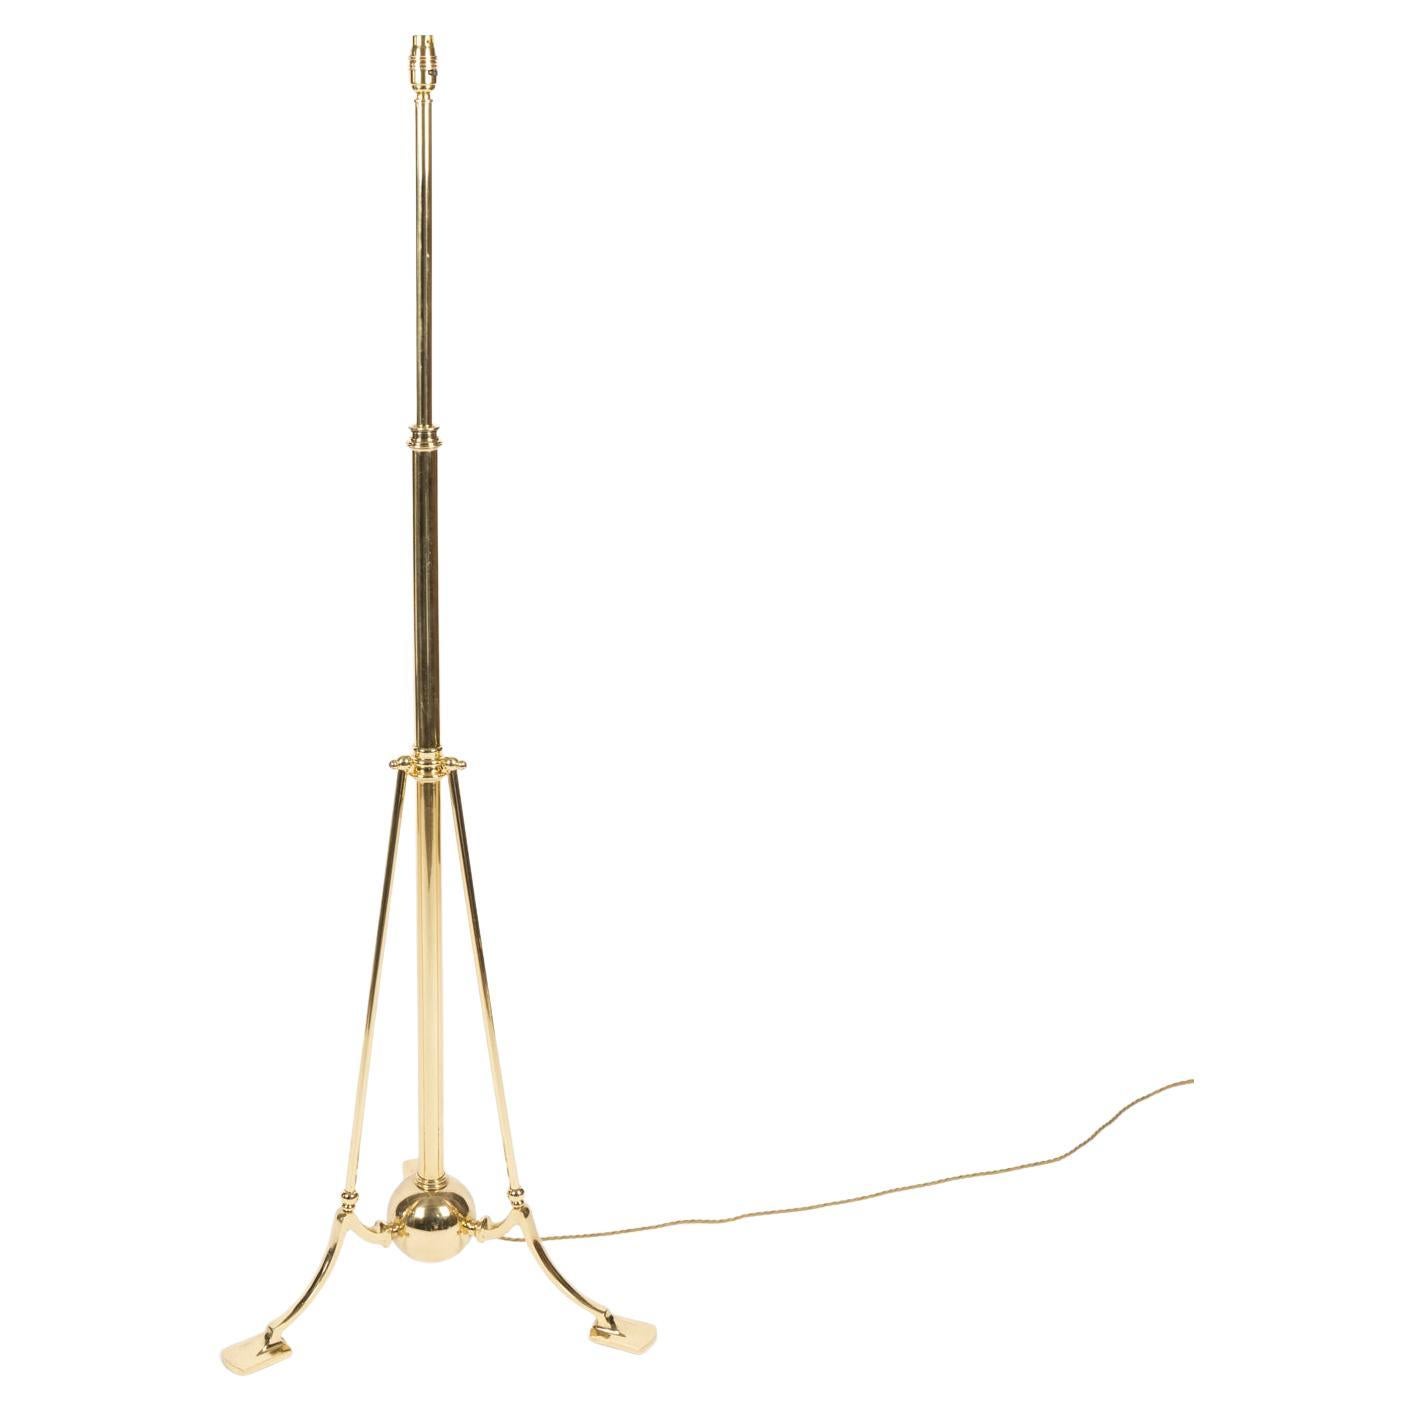 Brass Telescopic Standard Lamp in the Manner of Benson